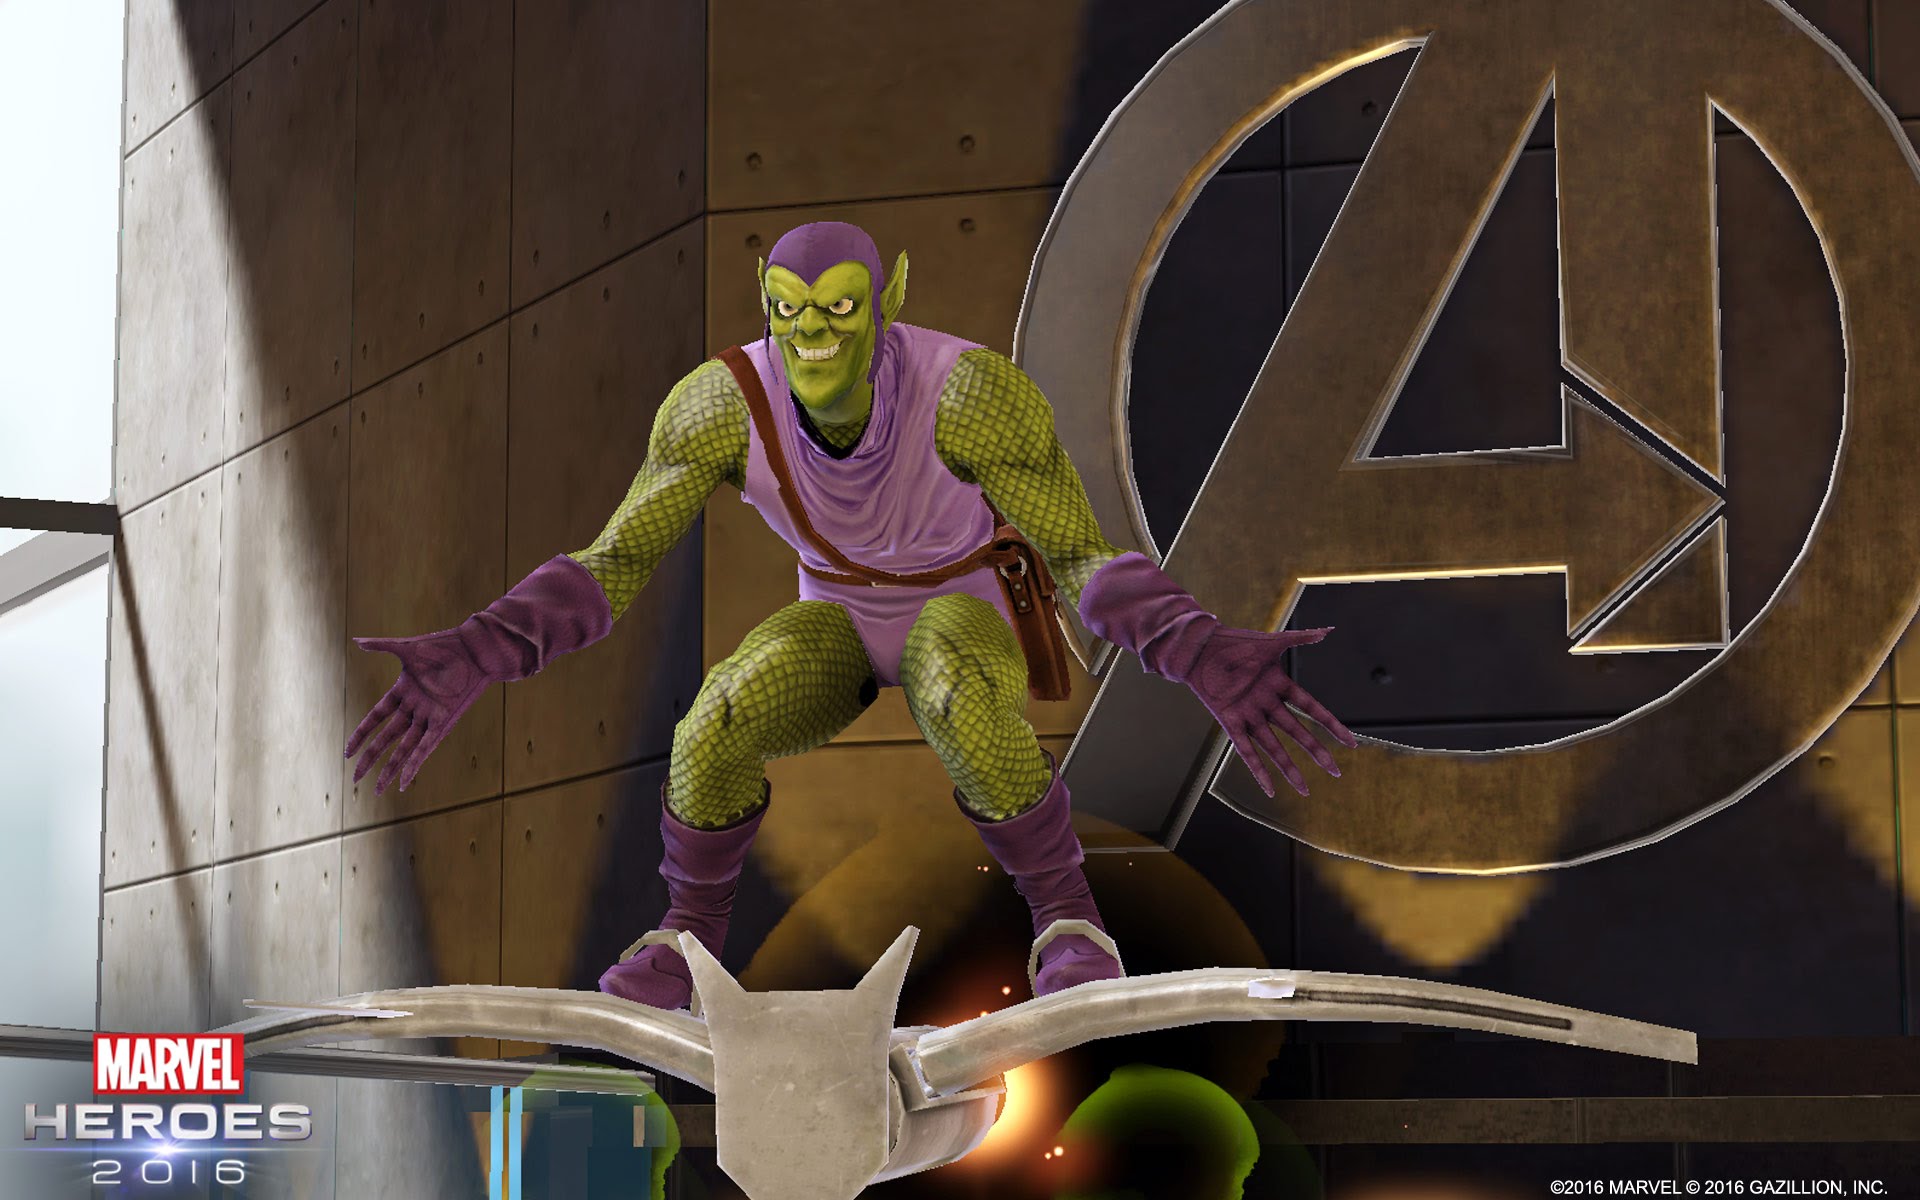 Green Goblin Wreaks Havoc in Marvel Heroes 2016!